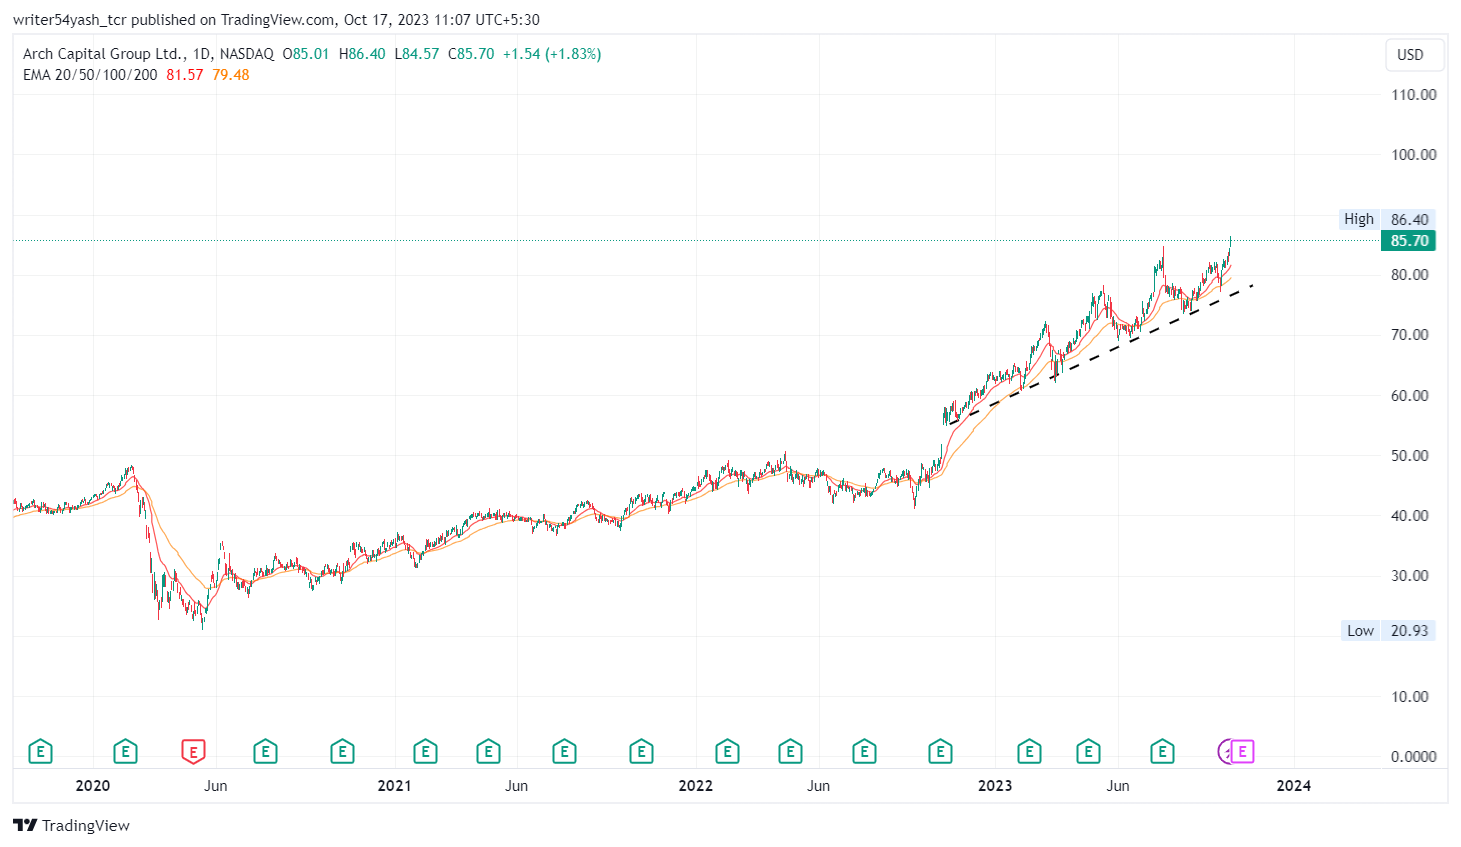 ACGL Stock Forecast: Can (NASDAQ: ACGL) Price Surpass $100 Mark?